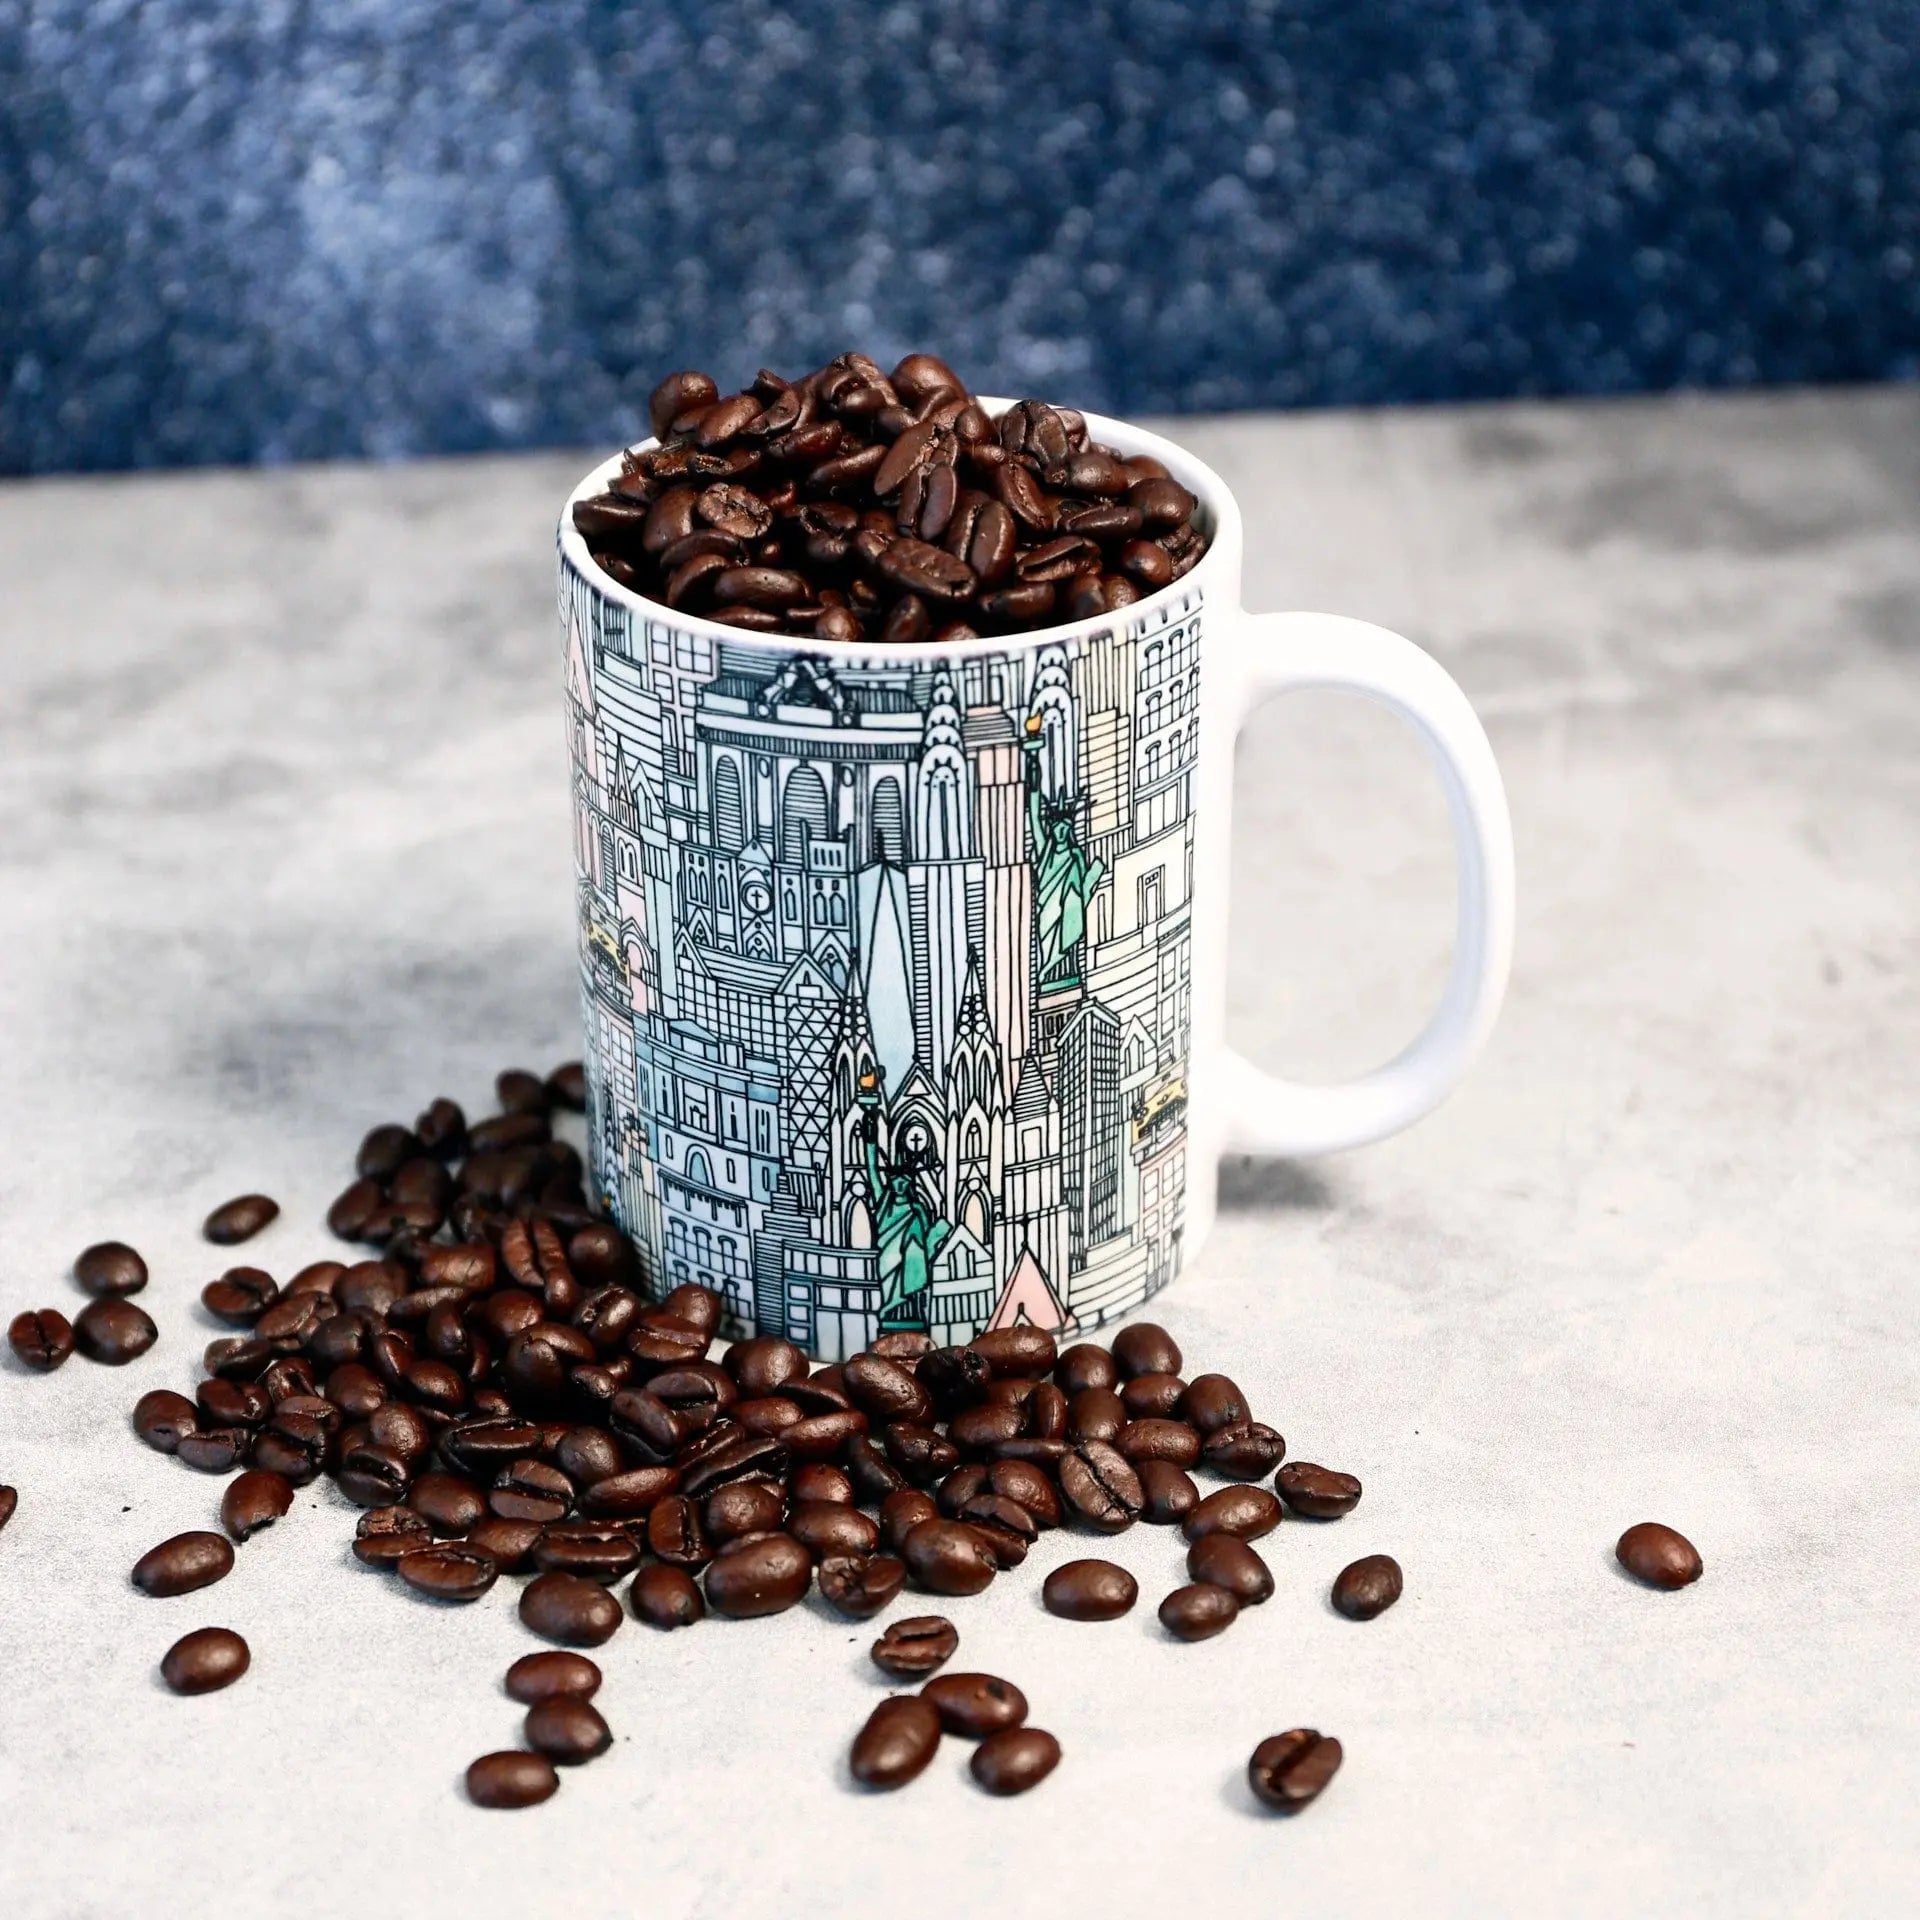 Modern Coffee Mug